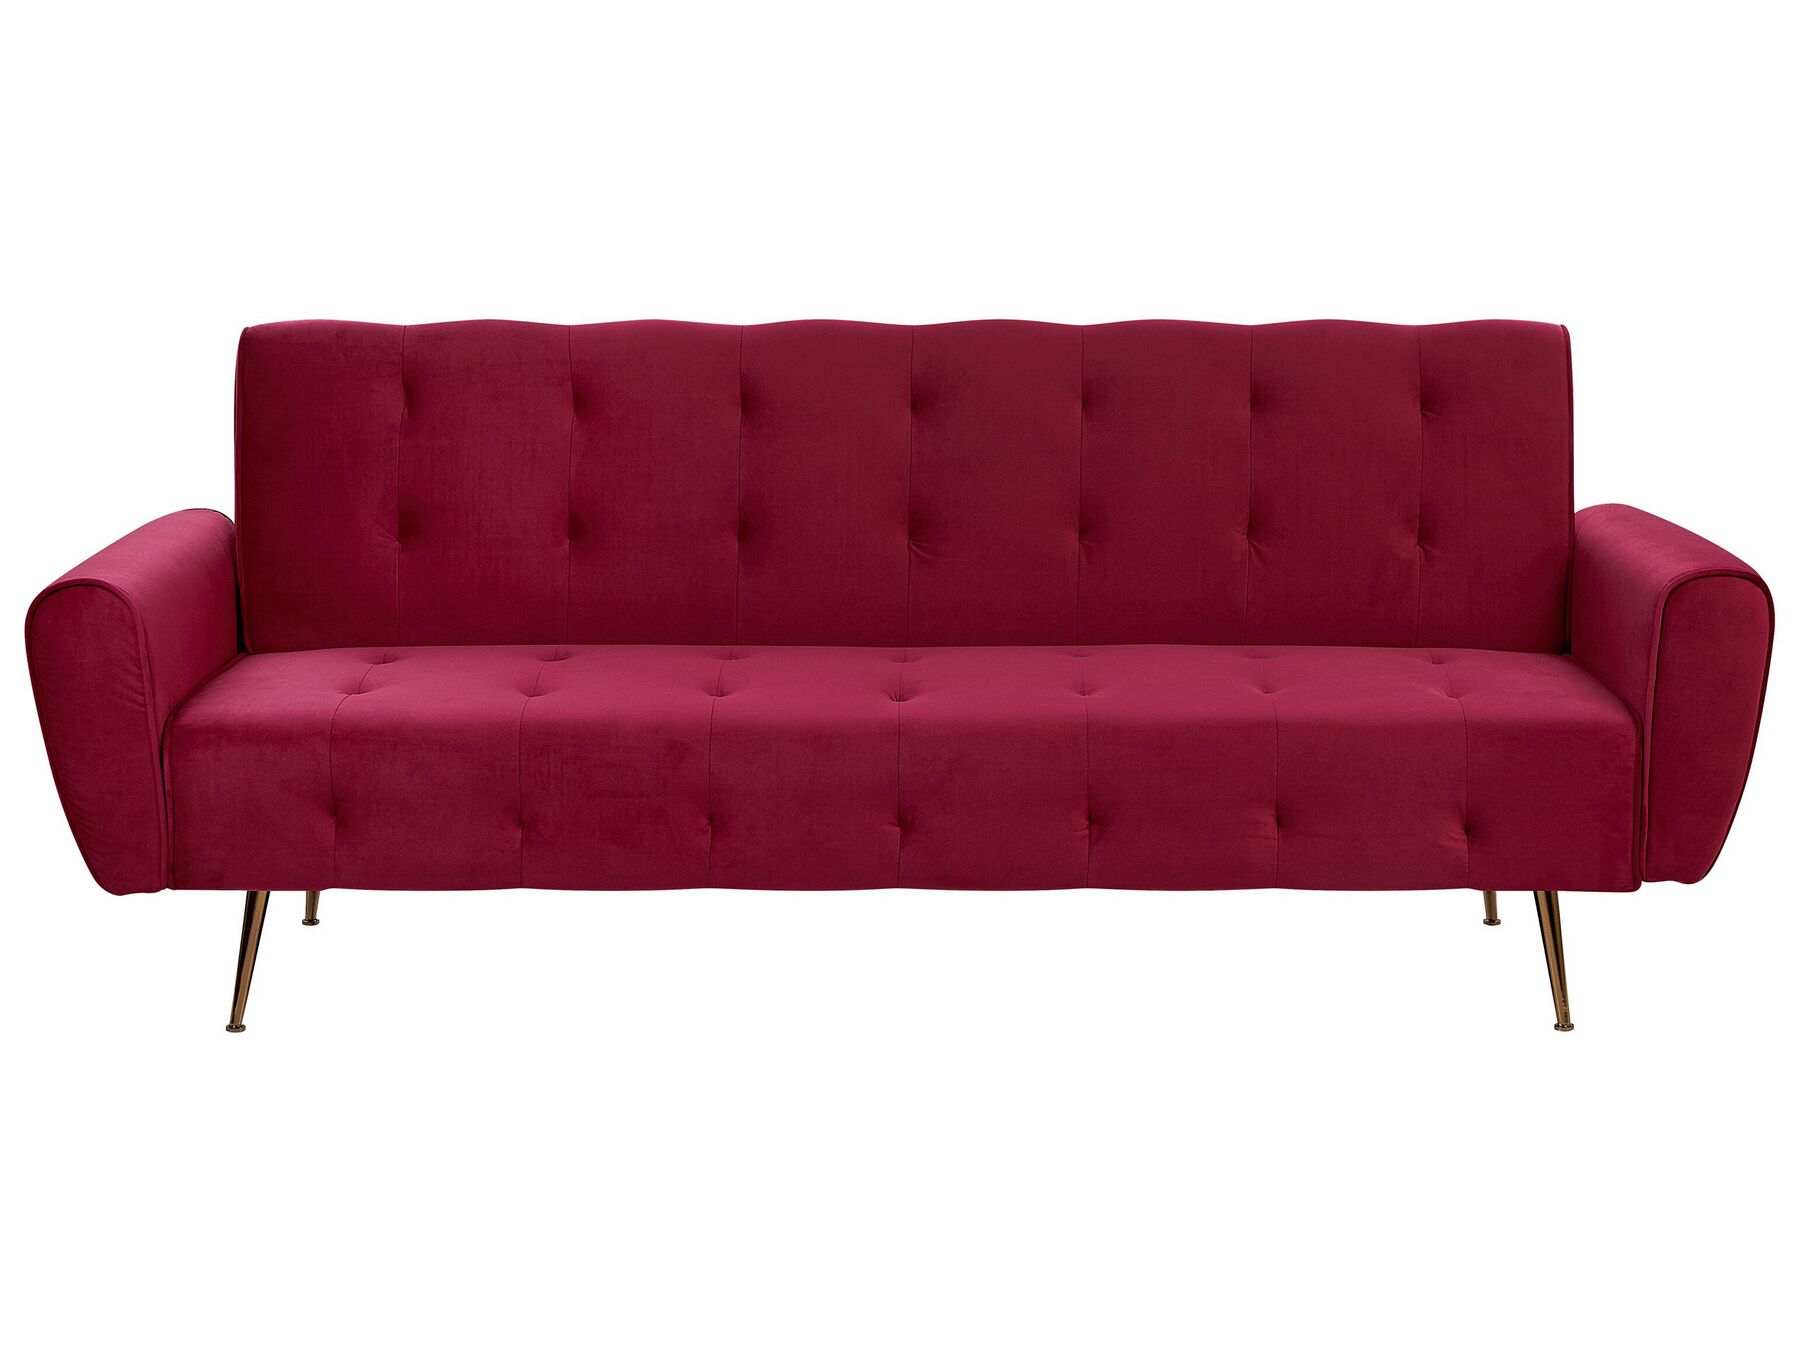 Sofa rozkładana welurowa burgundowa SELNES_762962